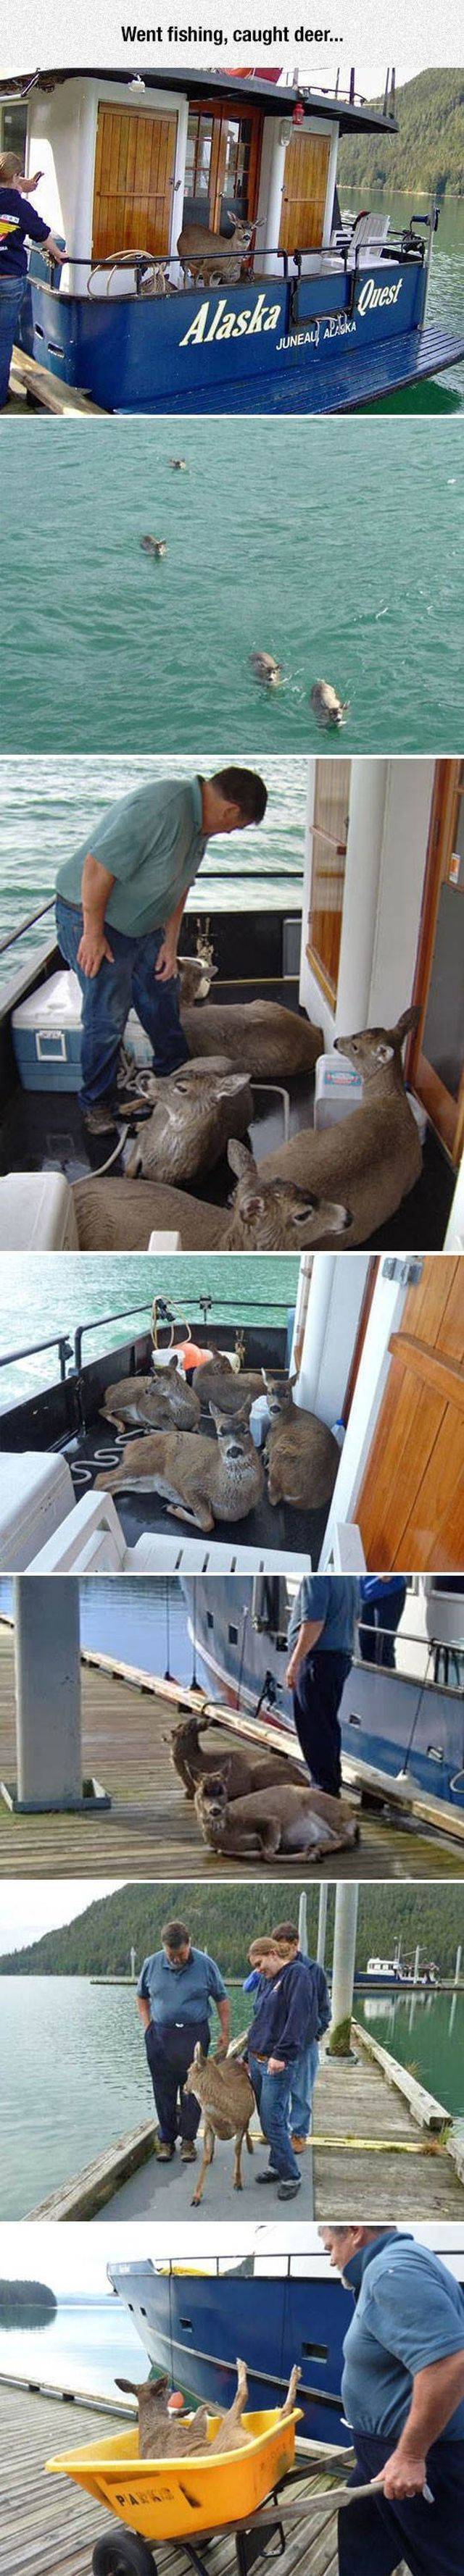 Deer - Went fishing, caught deer... Quest Alaska Menu Delika